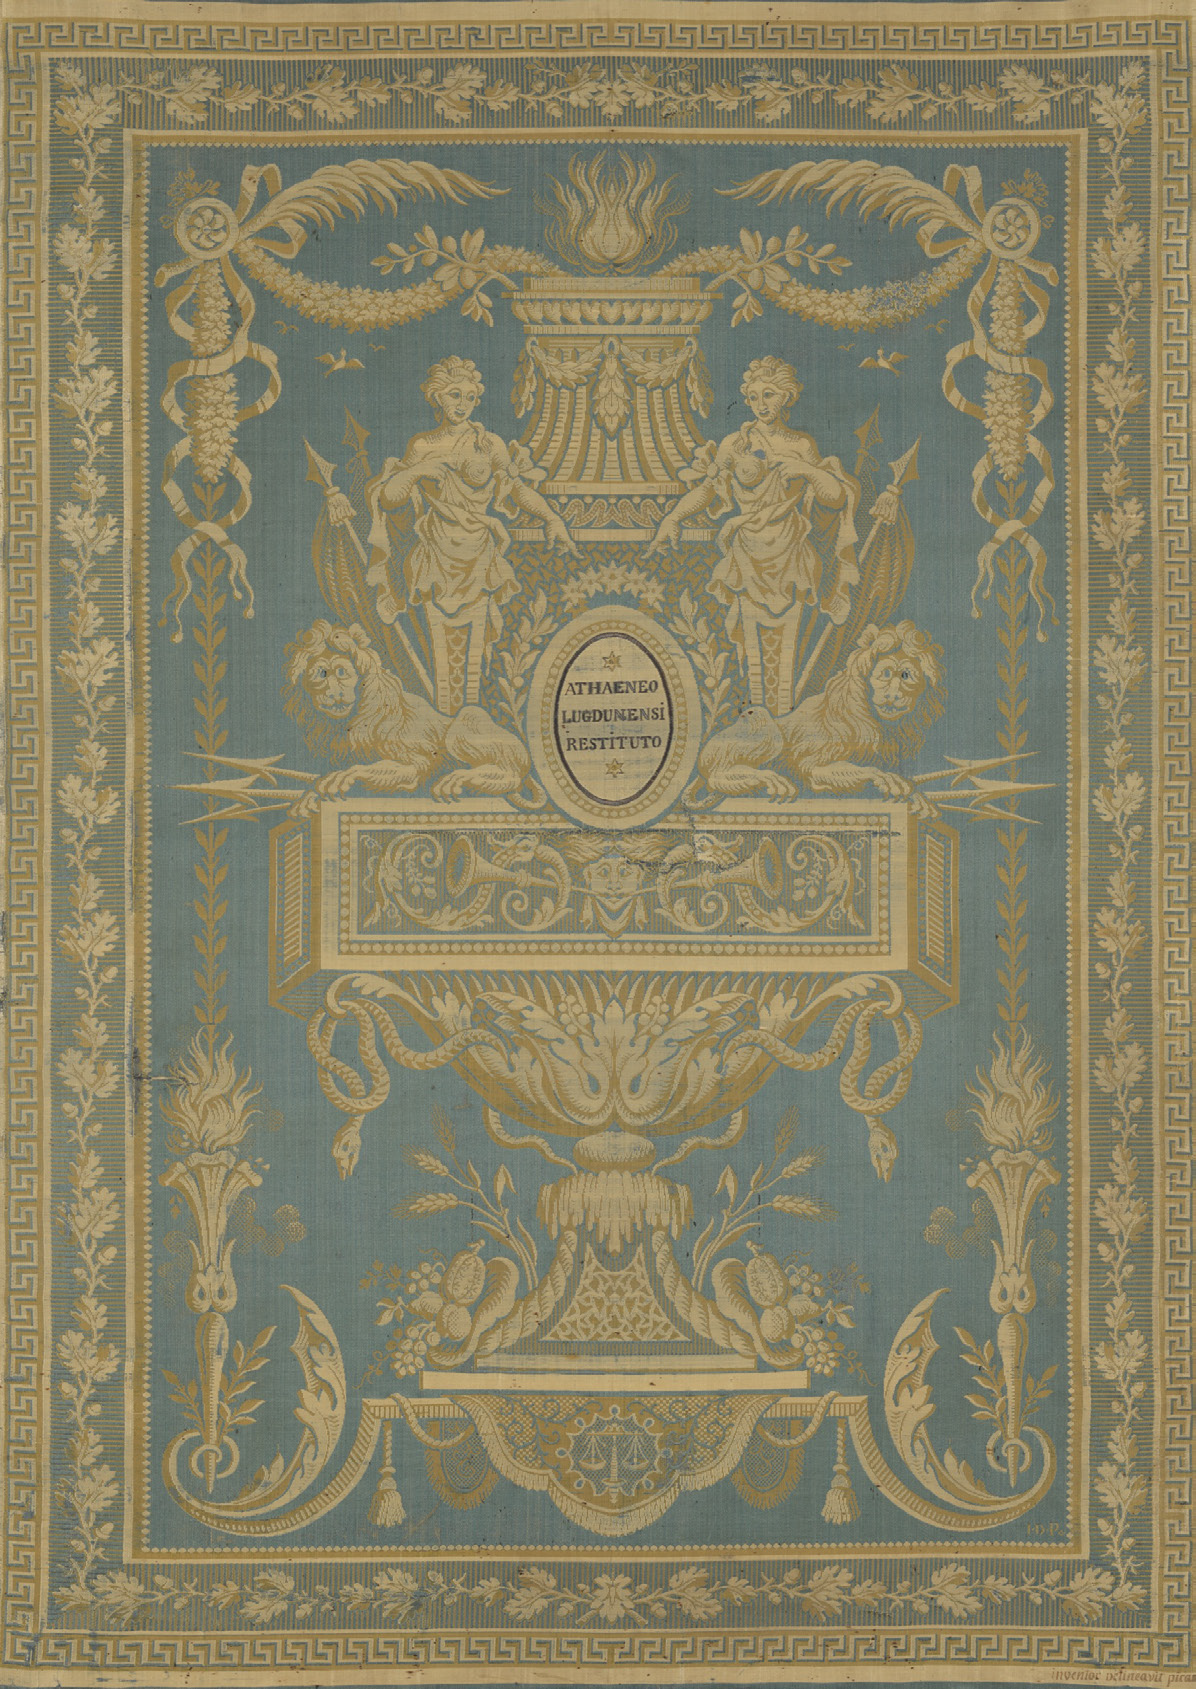 Athaeneo Lugdunensi restituto : écran en lampas par Joseph Picard, académicien (18e s., coll. Académie SBLA de Lyon)